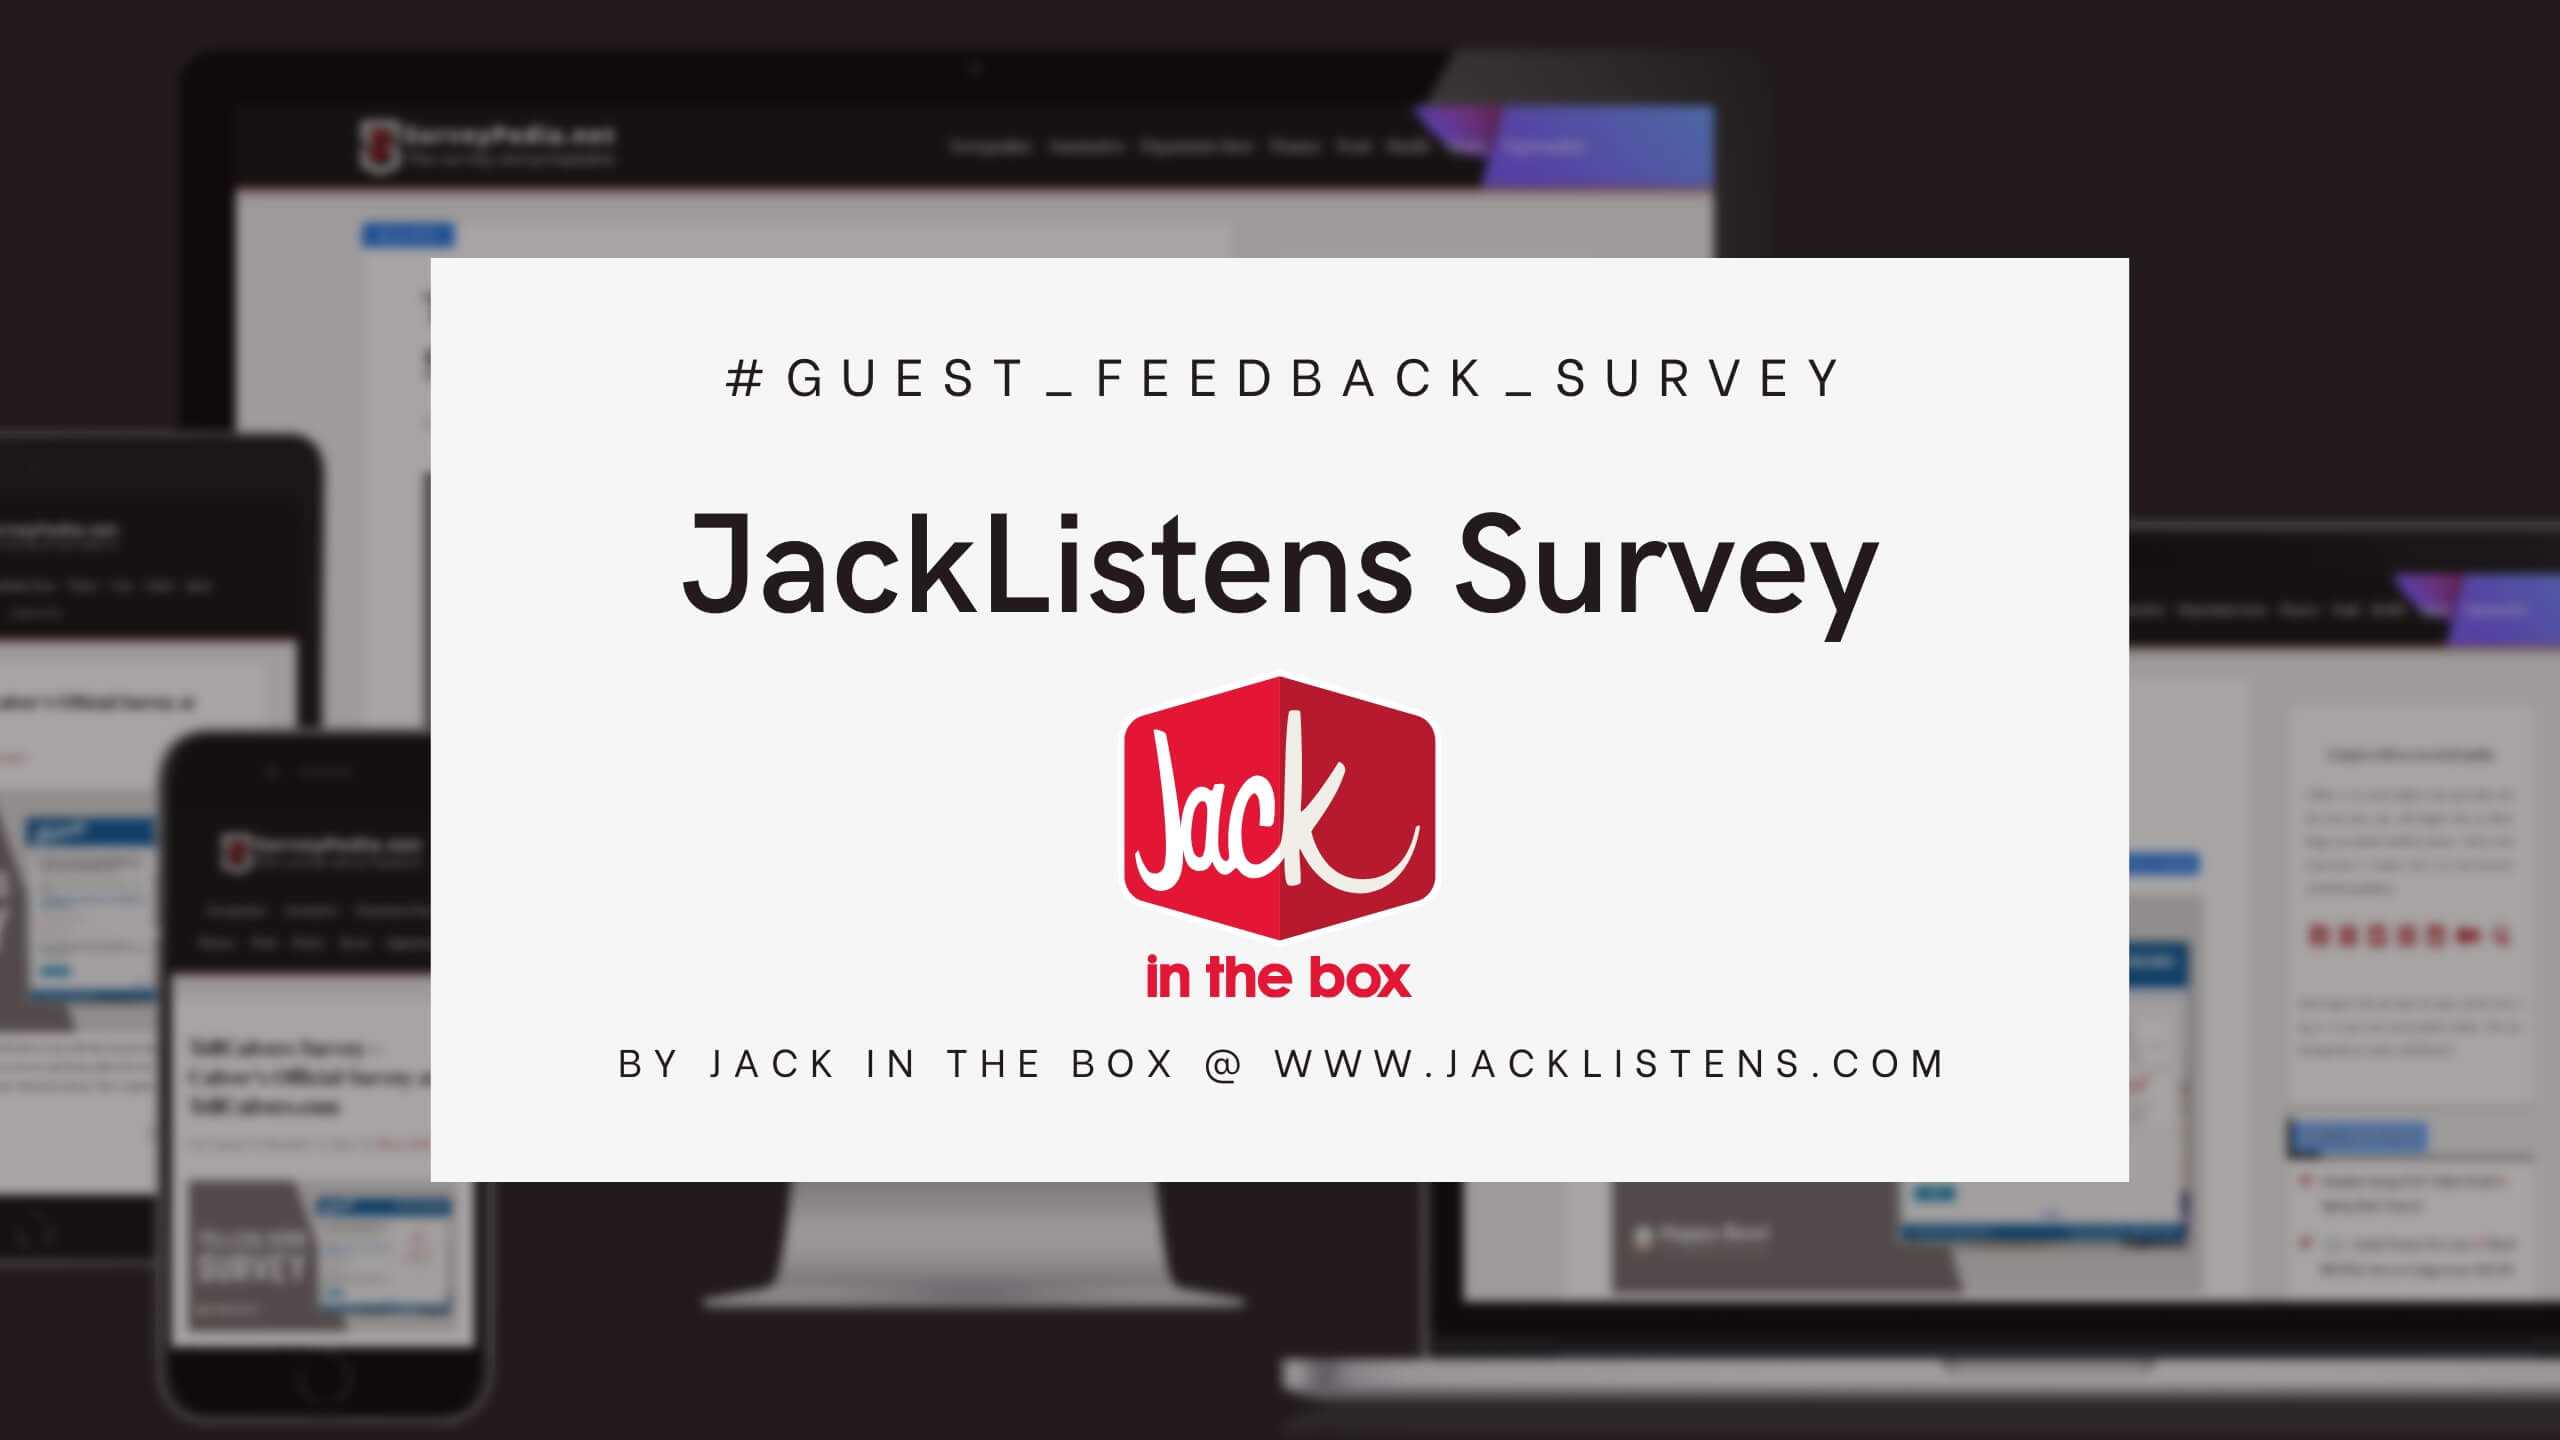 JackListens Survey: Jack In The Box Official Customer Feedback Survey at www.jacklistens.com